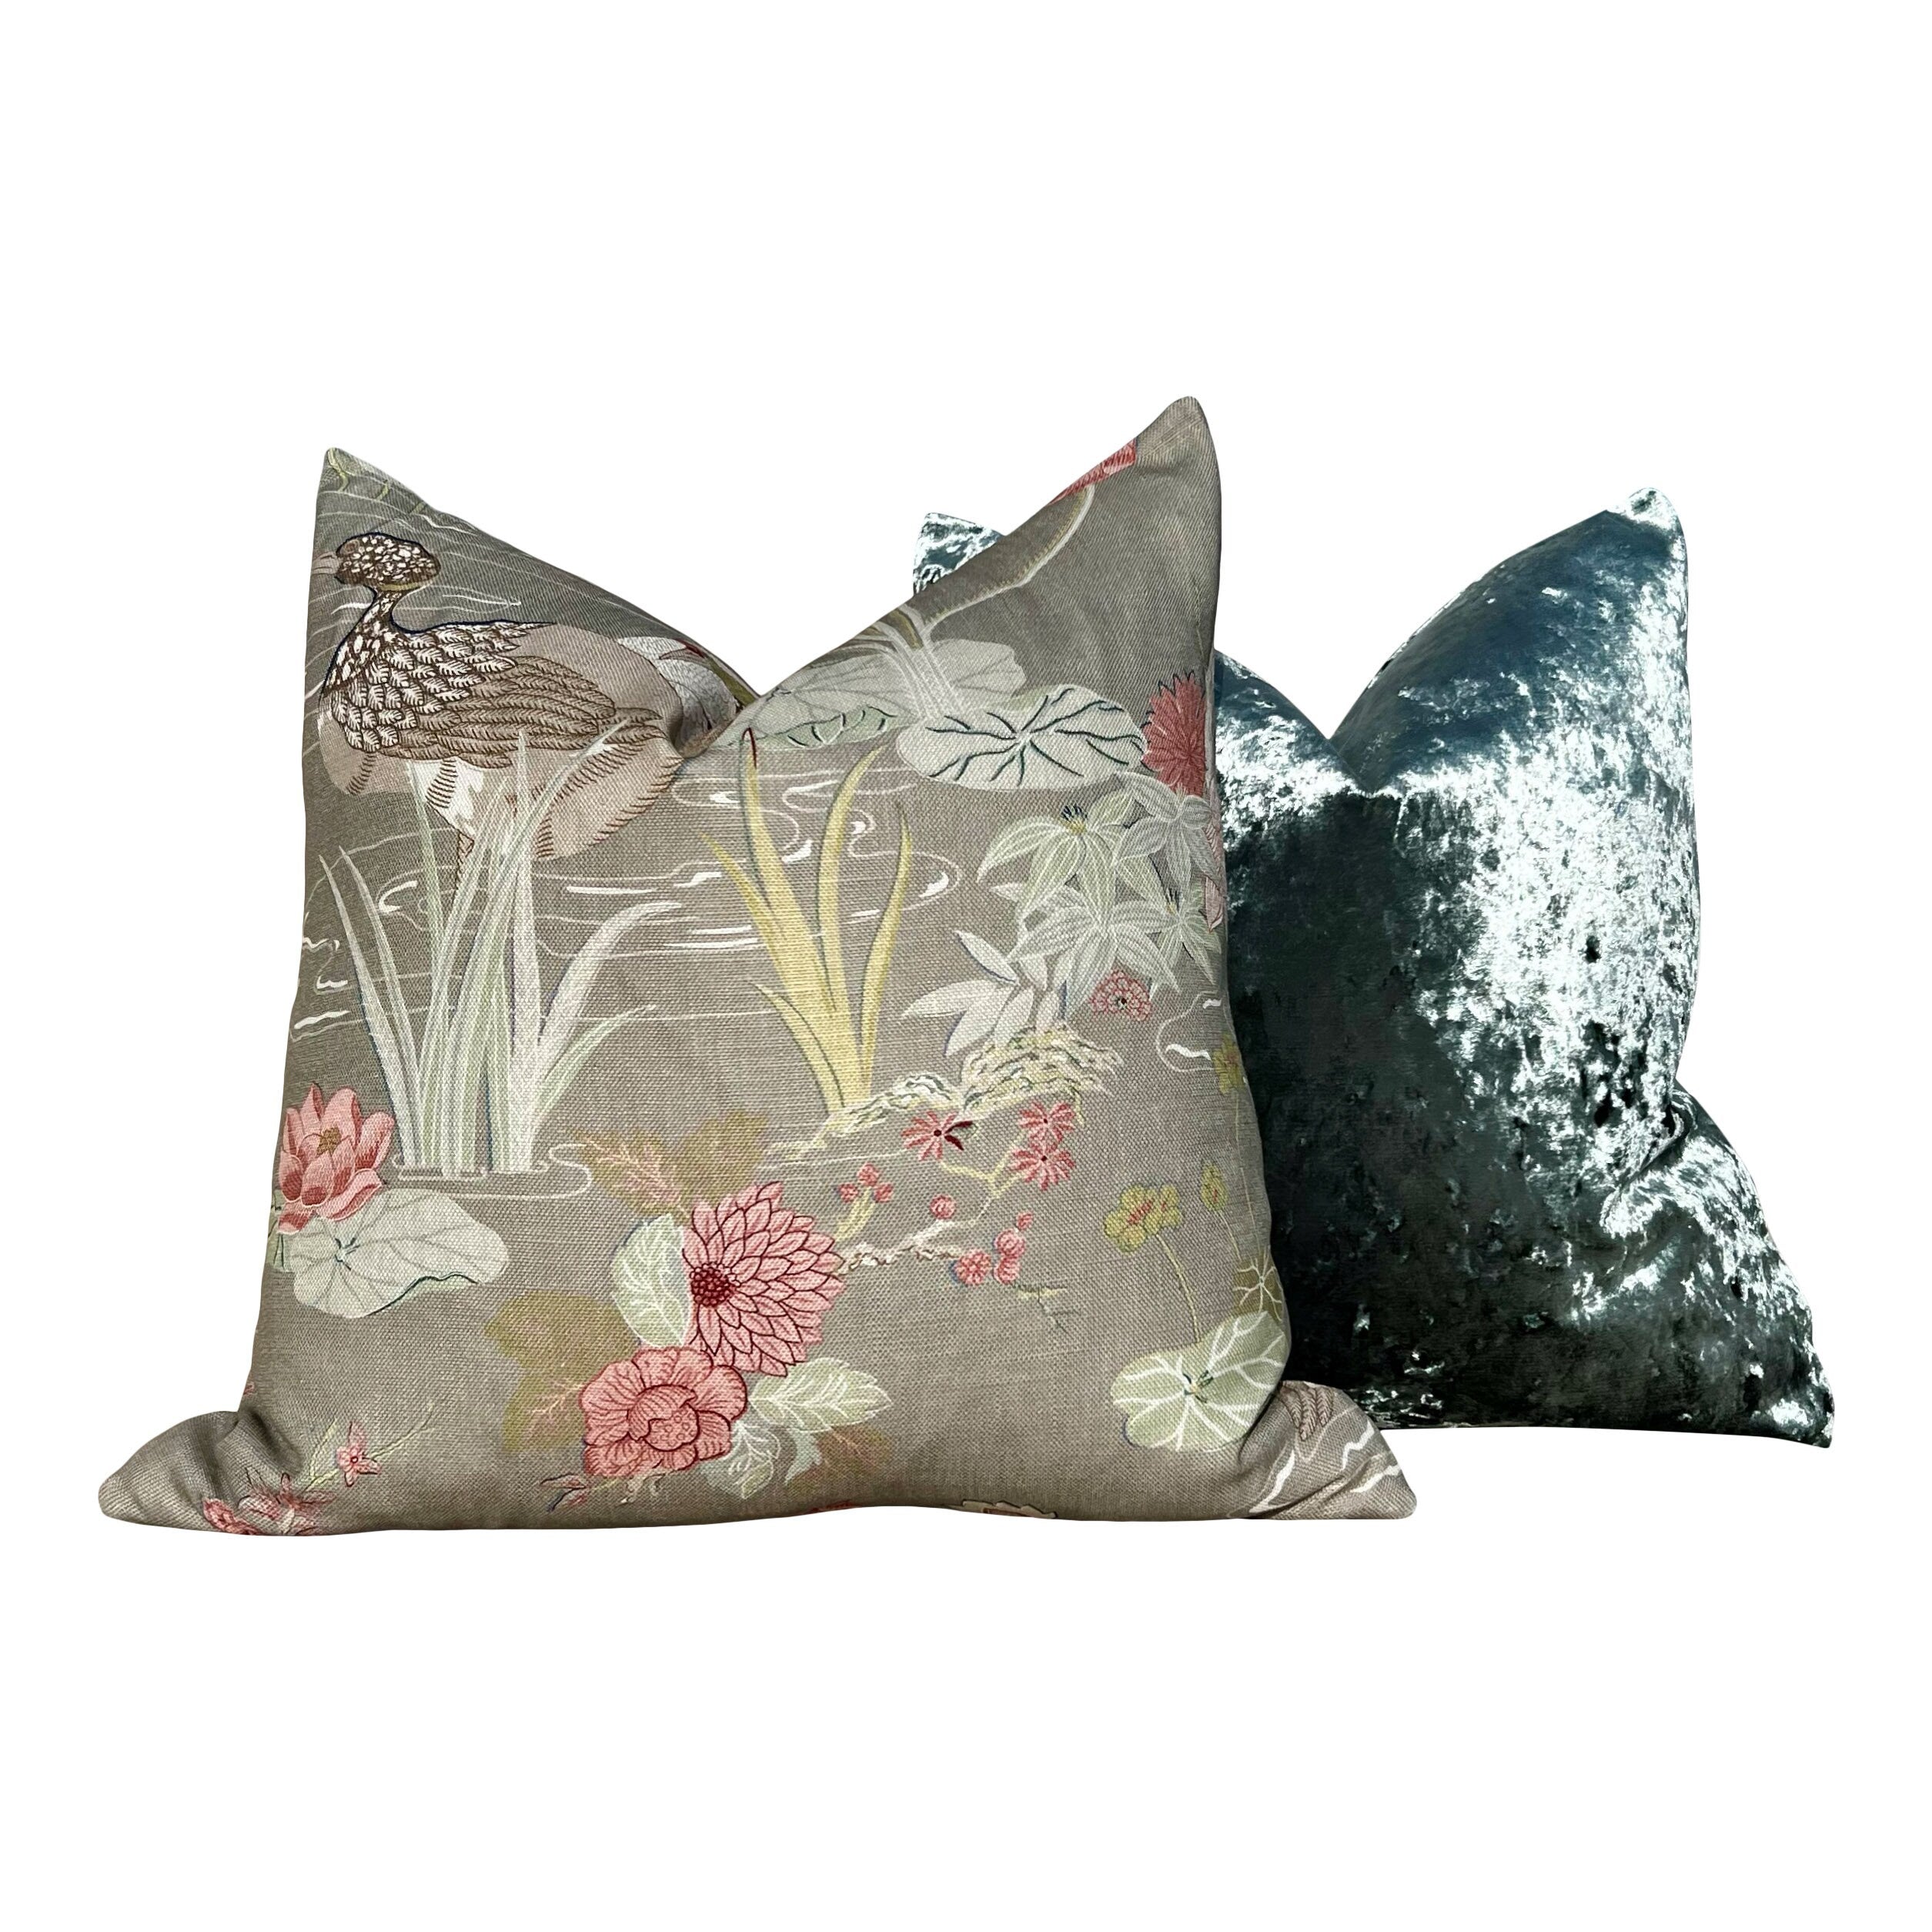 Lee Jofa Luzon Pillow in Fawn. Linen Taupe Pillow Designer Exotic Bird Pillows, Luxury Botanical Pillow, euro Sham Linen Cover 26x26 Coral